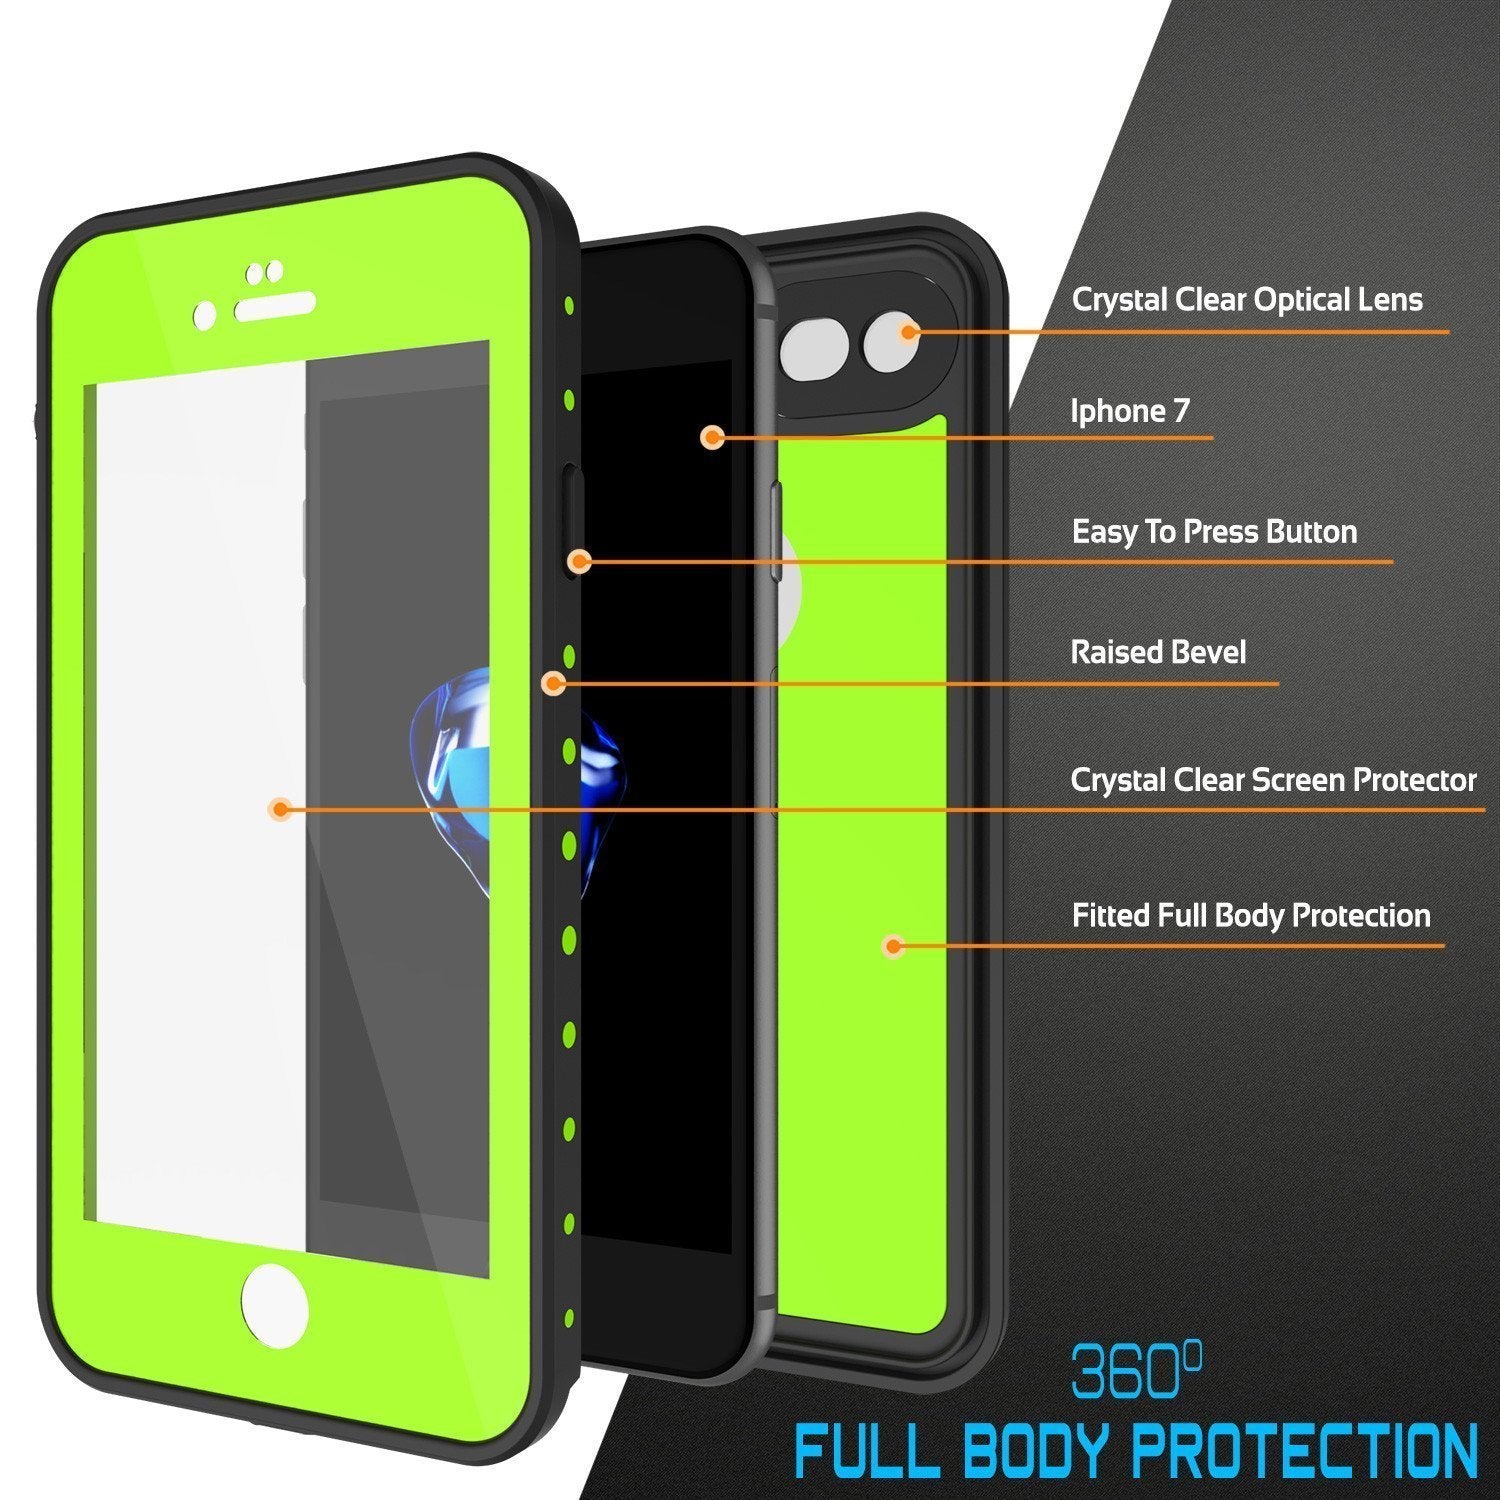 iPhone SE (4.7") Waterproof Case, Punkcase [Light Green] [StudStar Series] [Slim Fit][IP68 Certified]  [Dirt/Snow Proof]